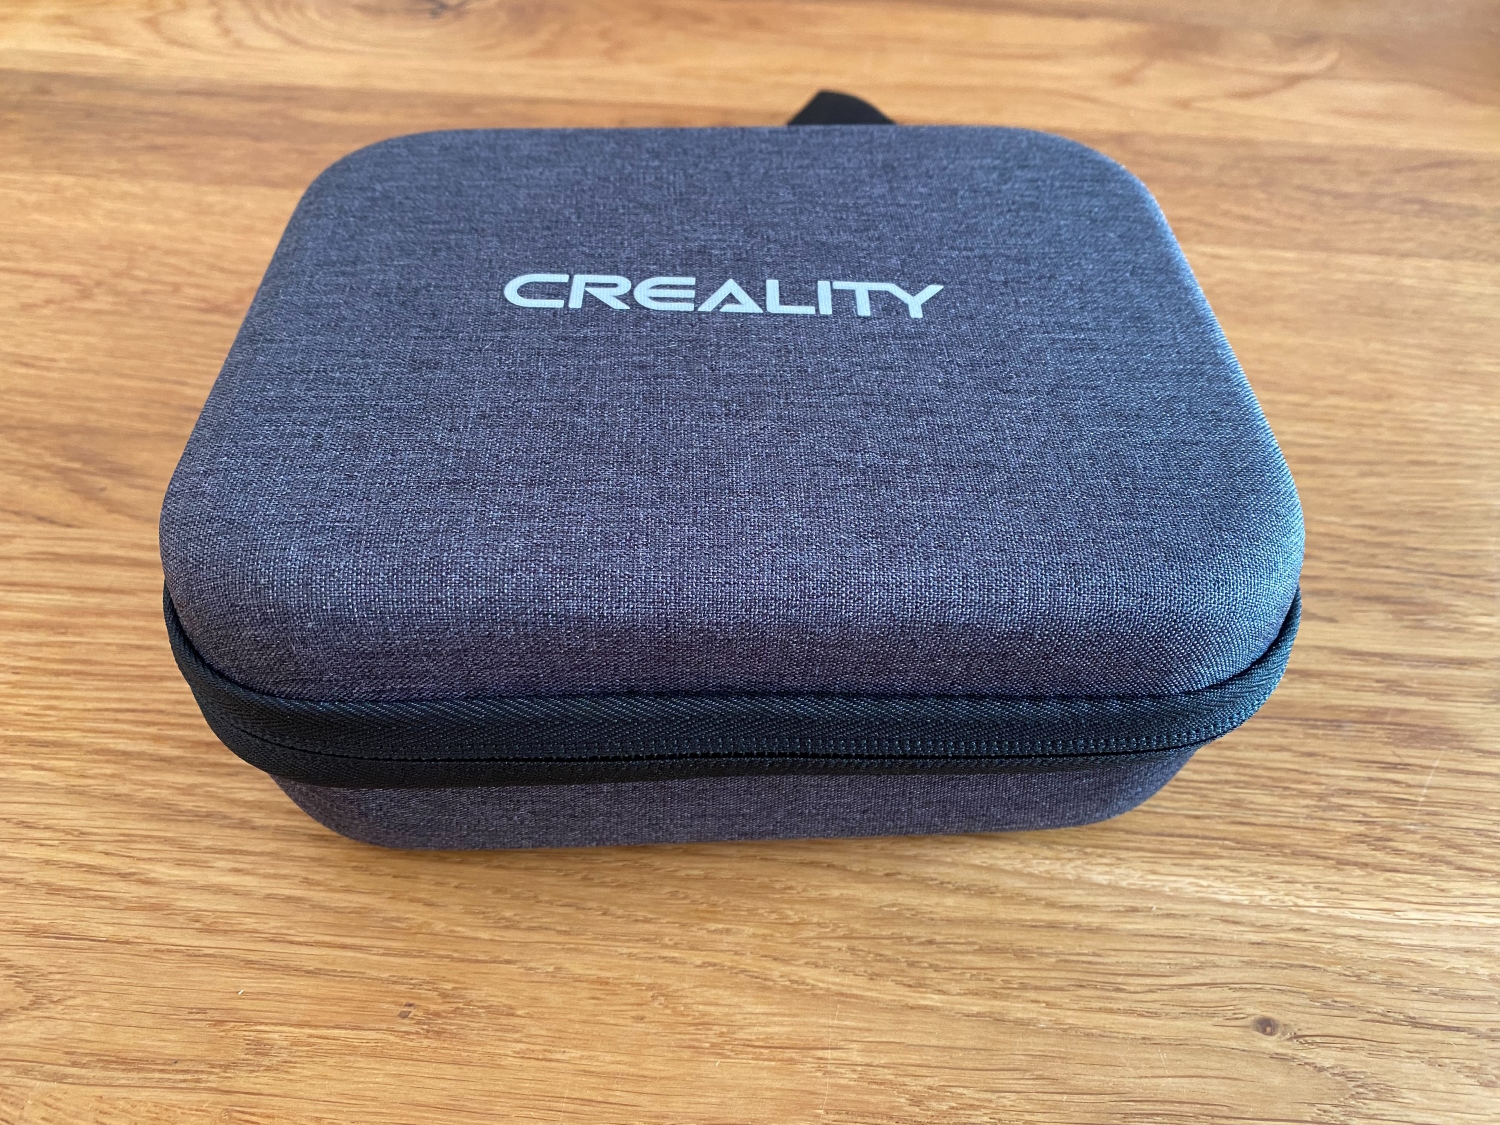 Creality 3D Scanner Ferret Unboxing (3)